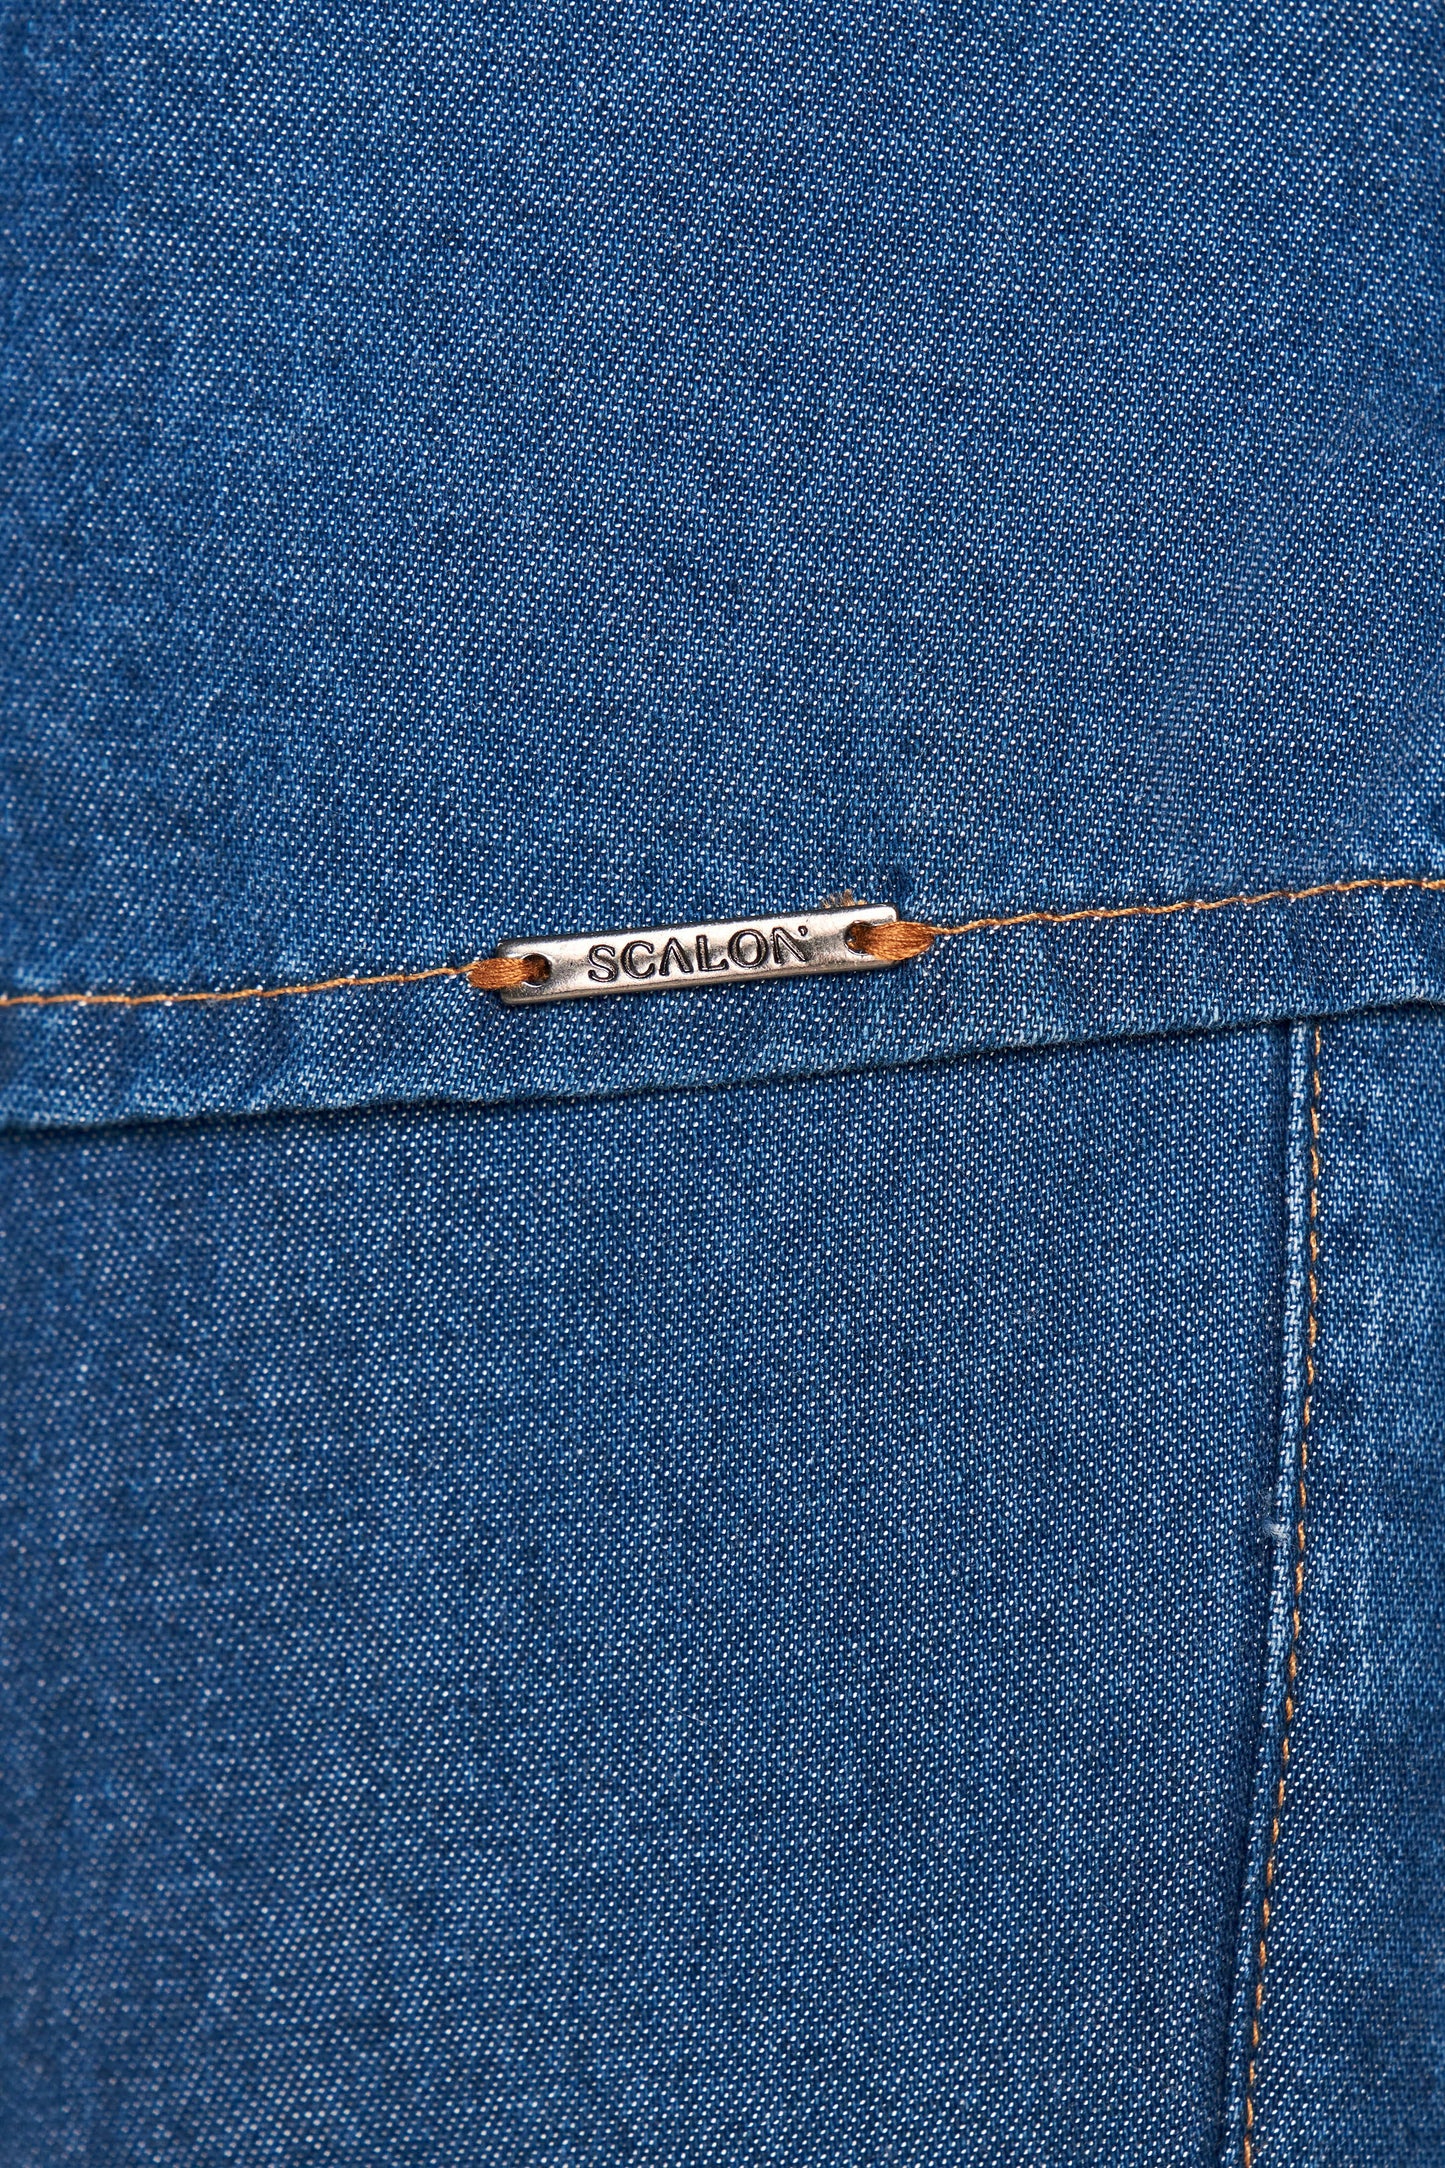 camisa jeans manga longa tradicional